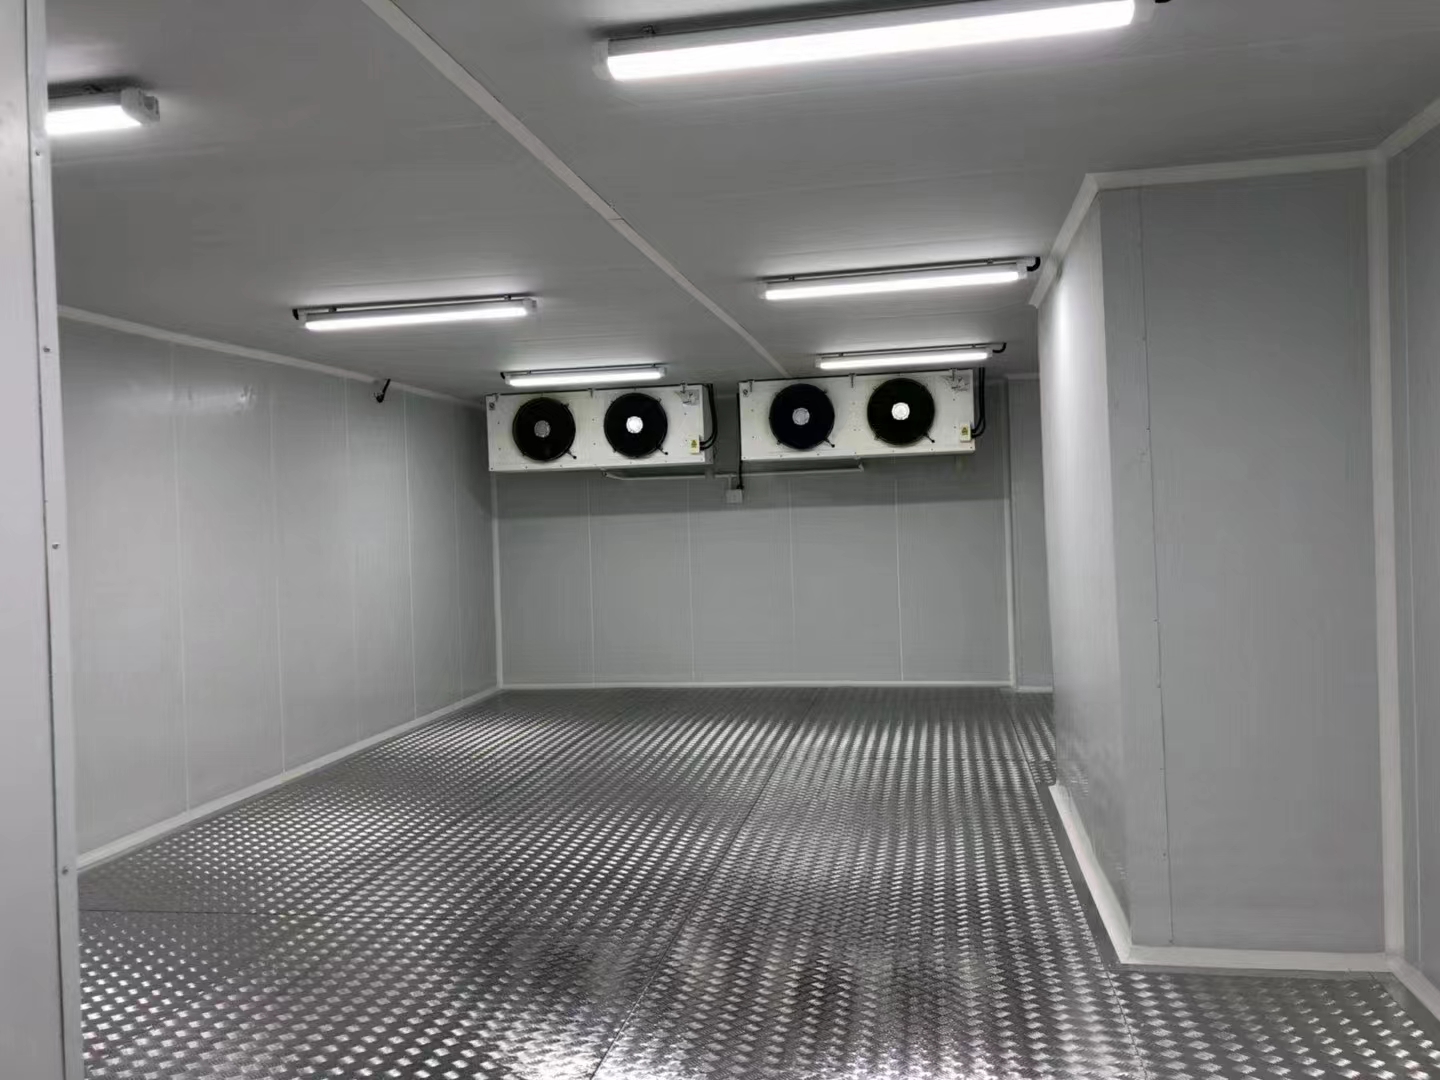 Cold Room/Cold Storage with Bitzer Refrigerator Compressor Unit for Food Storage 